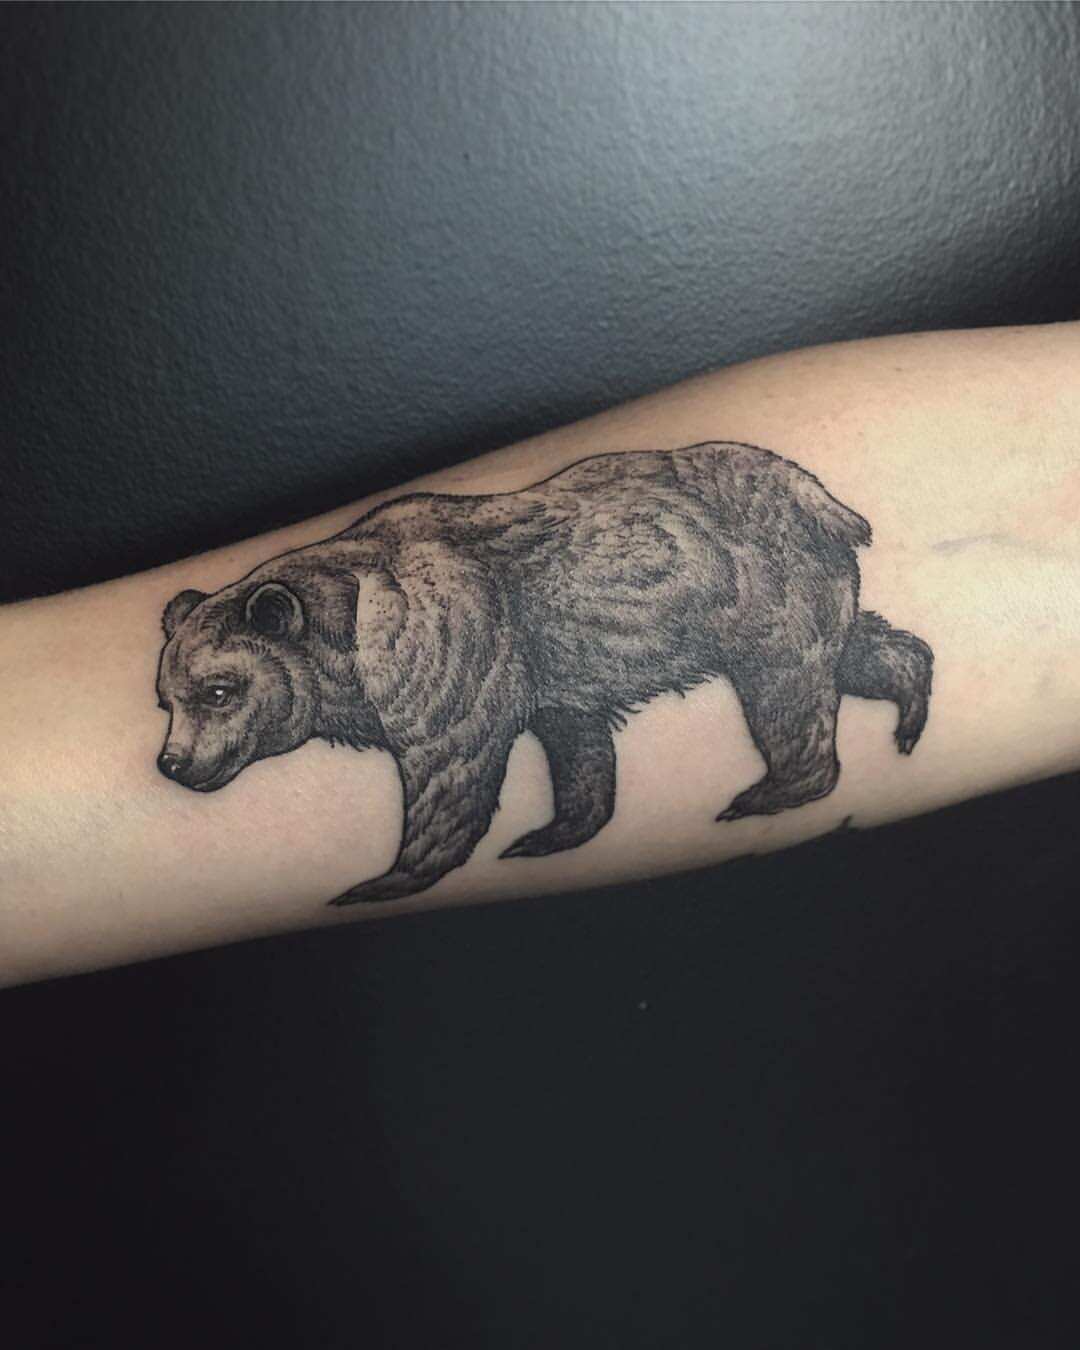 Tattoo tagged with: small, bear, arm, black, animal, tiny, little, adria de  yzaguirre, nature, blackwork, wrist, forearm, illustrative, polar bear |  inked-app.com